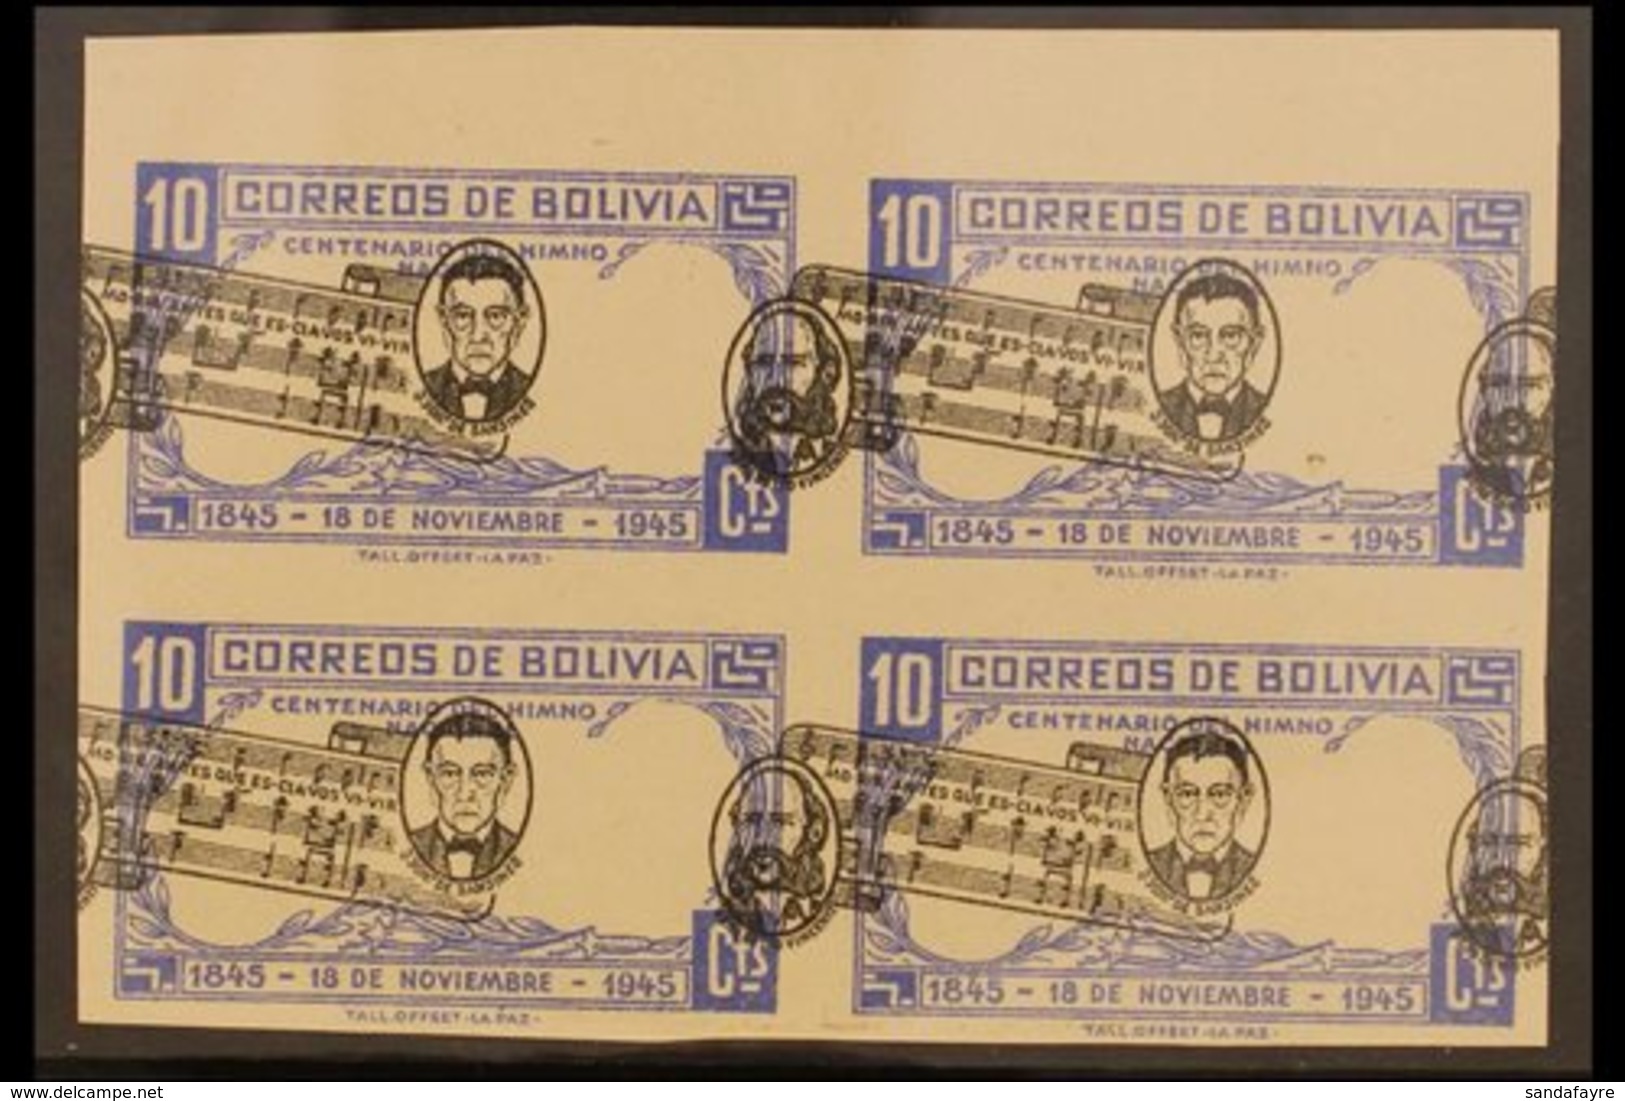 1946 10c Black & Ultramarine National Anthem (Scott 309, SG 446), Never Hinged Mint Marginal IMPERF BLOCK Of 4 With Dram - Bolivia